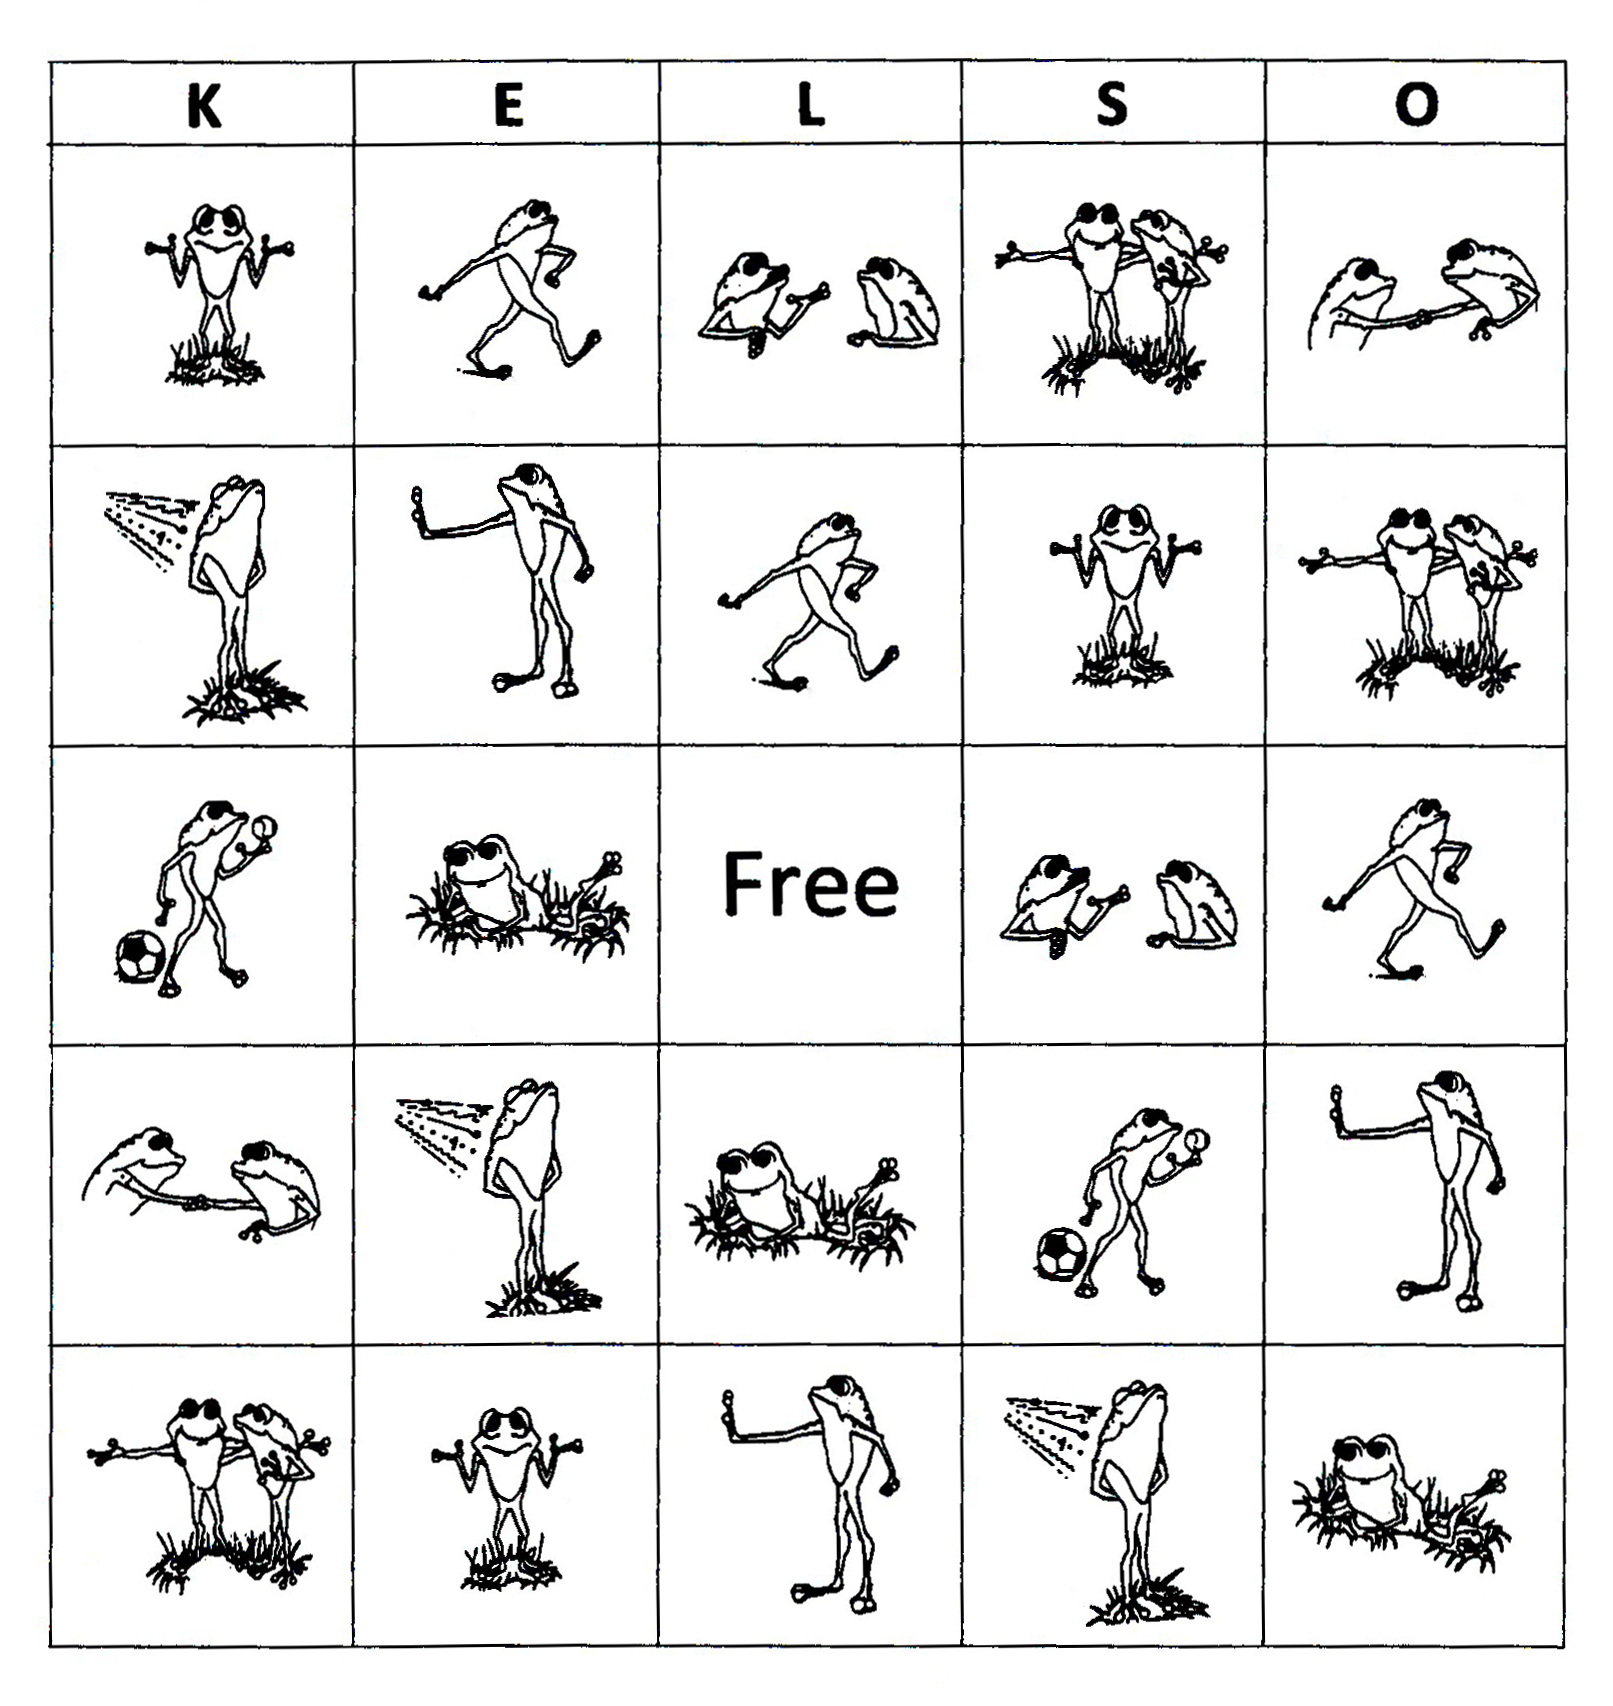 Elementary conflict management game bingo